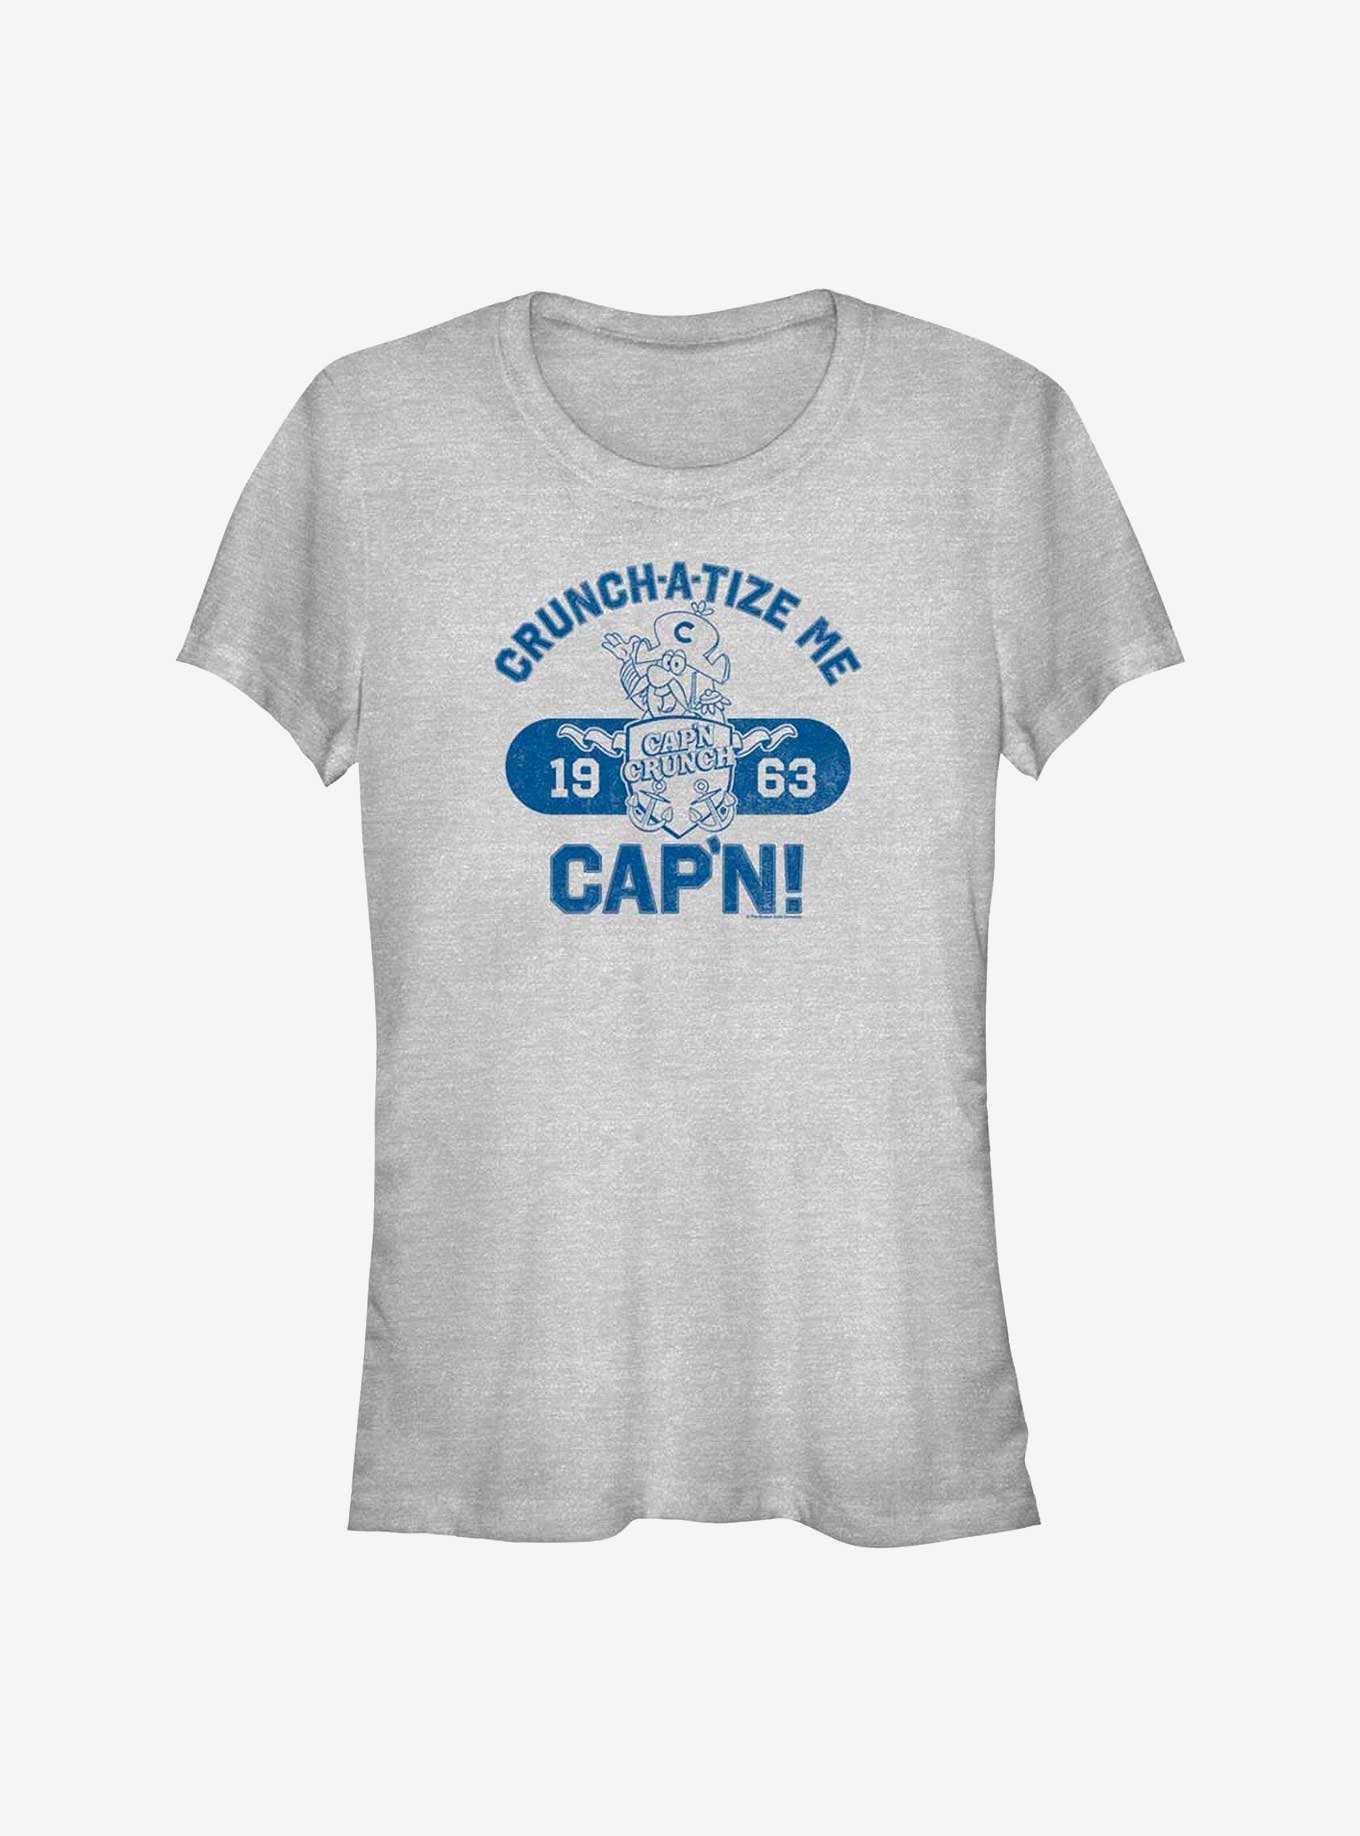 Capn Crunch Collegiate Girls T-Shirt, , hi-res